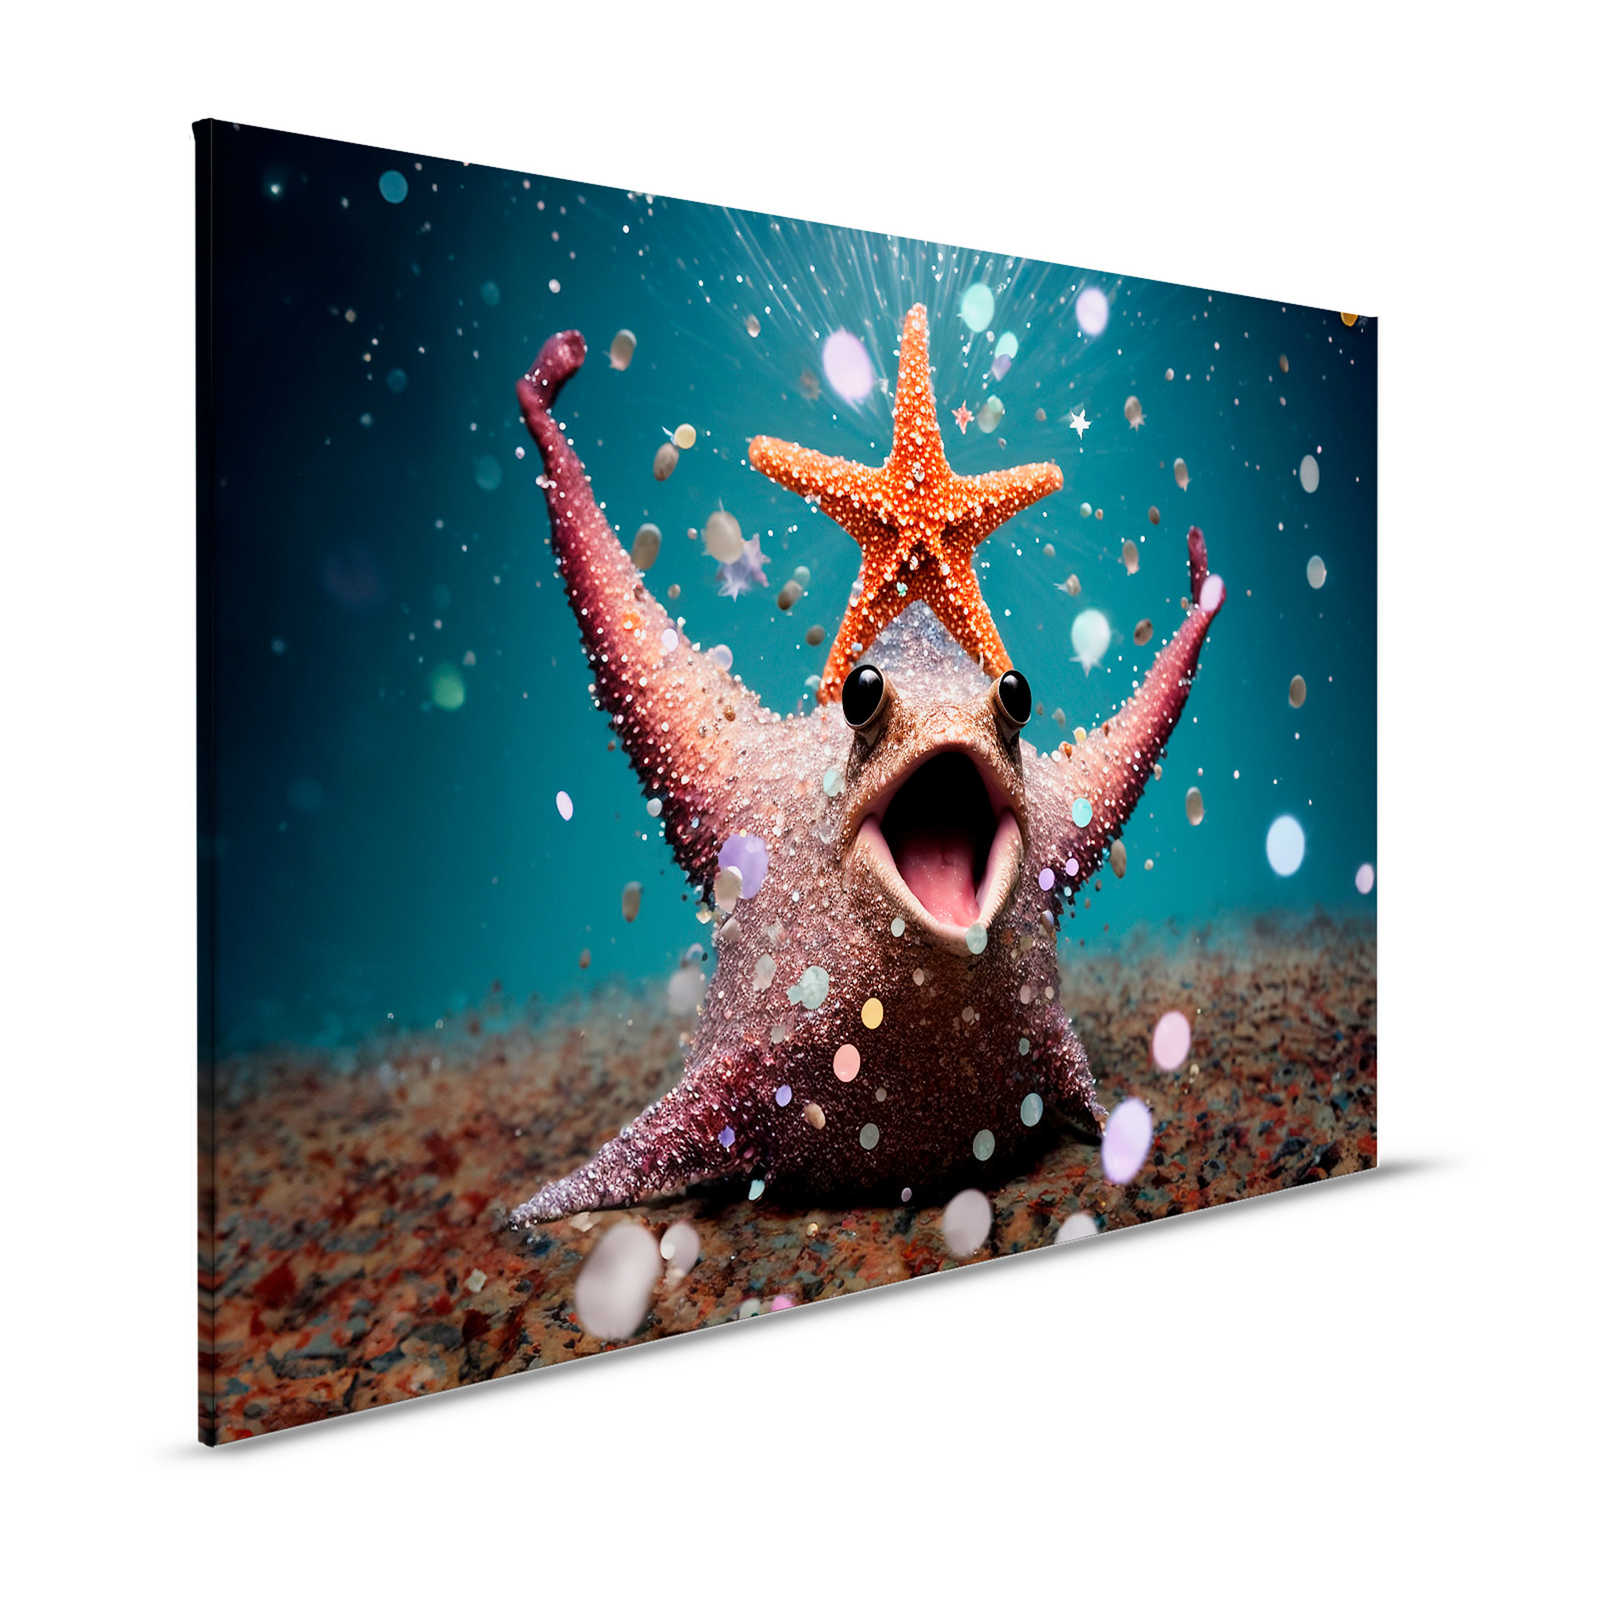 KI Canvas painting »party starfish« - 120 cm x 80 cm
